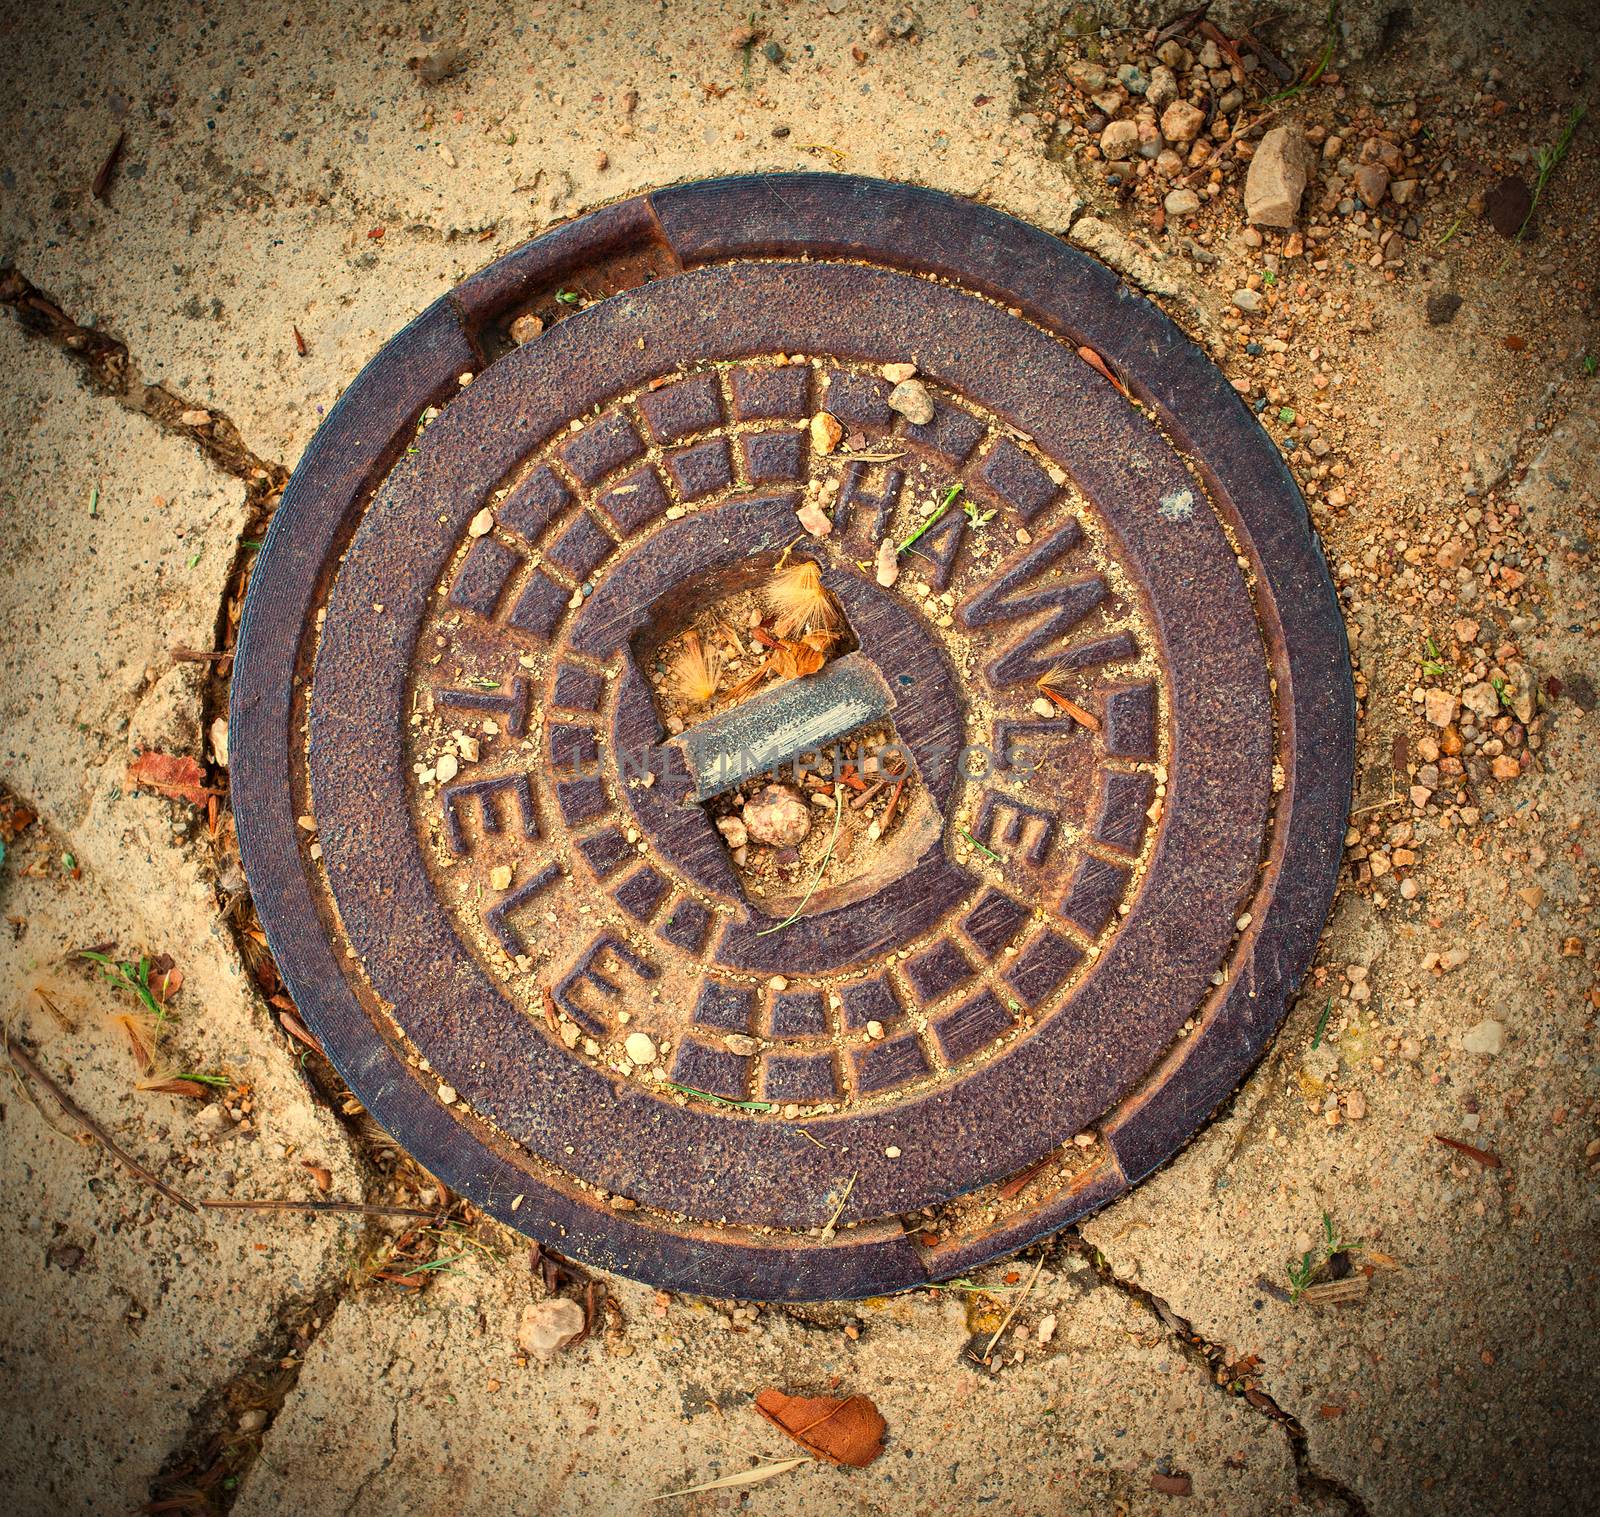 manhole cover in Tossa de Mar, Catalonia, Spain, instagram image style